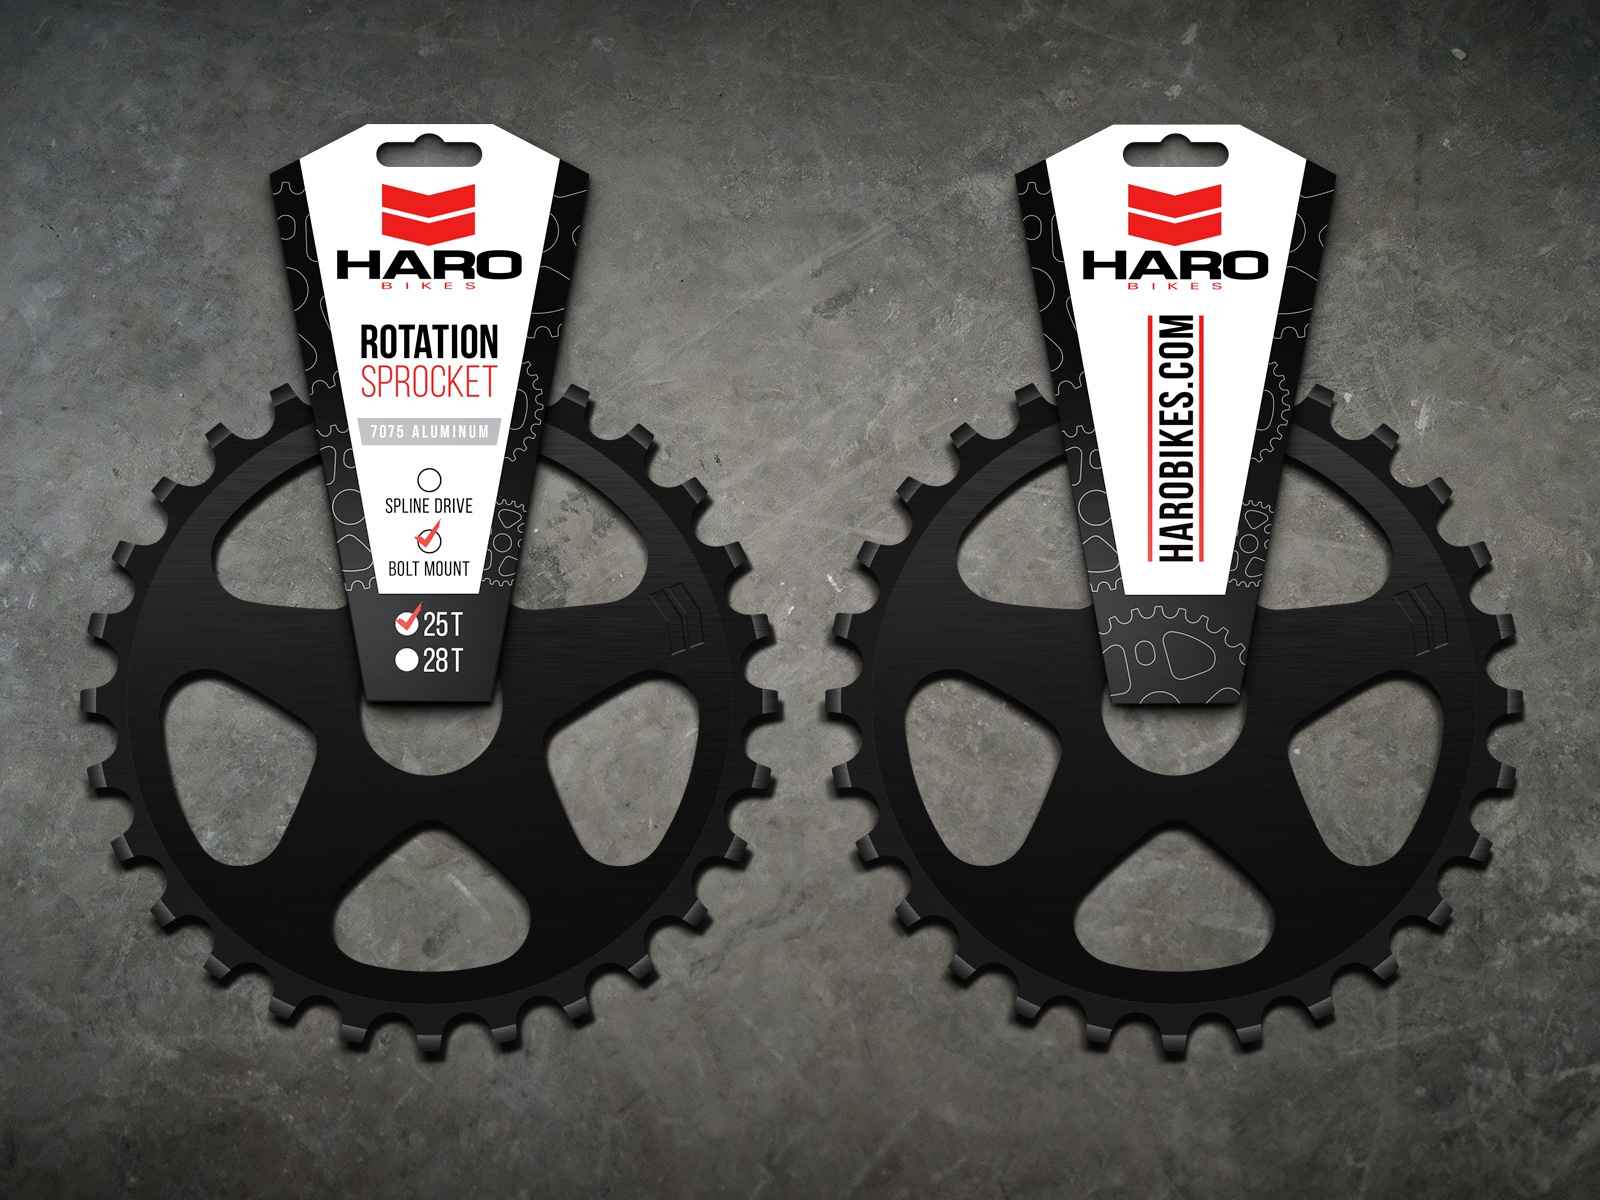 Haro Bikes Sprocket Packaging By Randy Assell On Dribbble